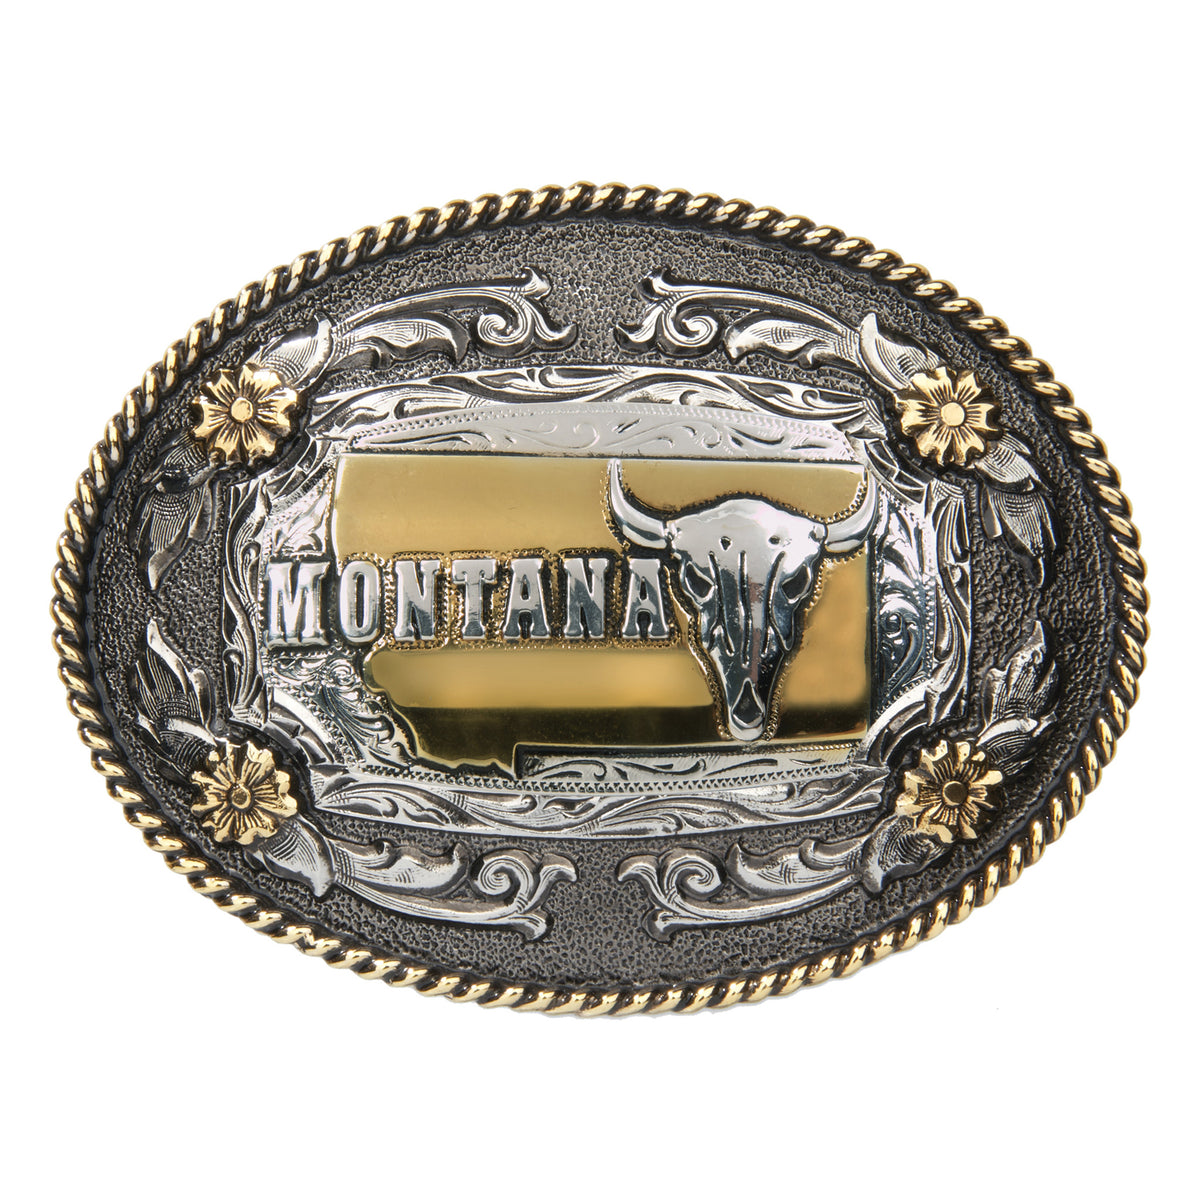 Montana — Oval Rope Edge Buckle